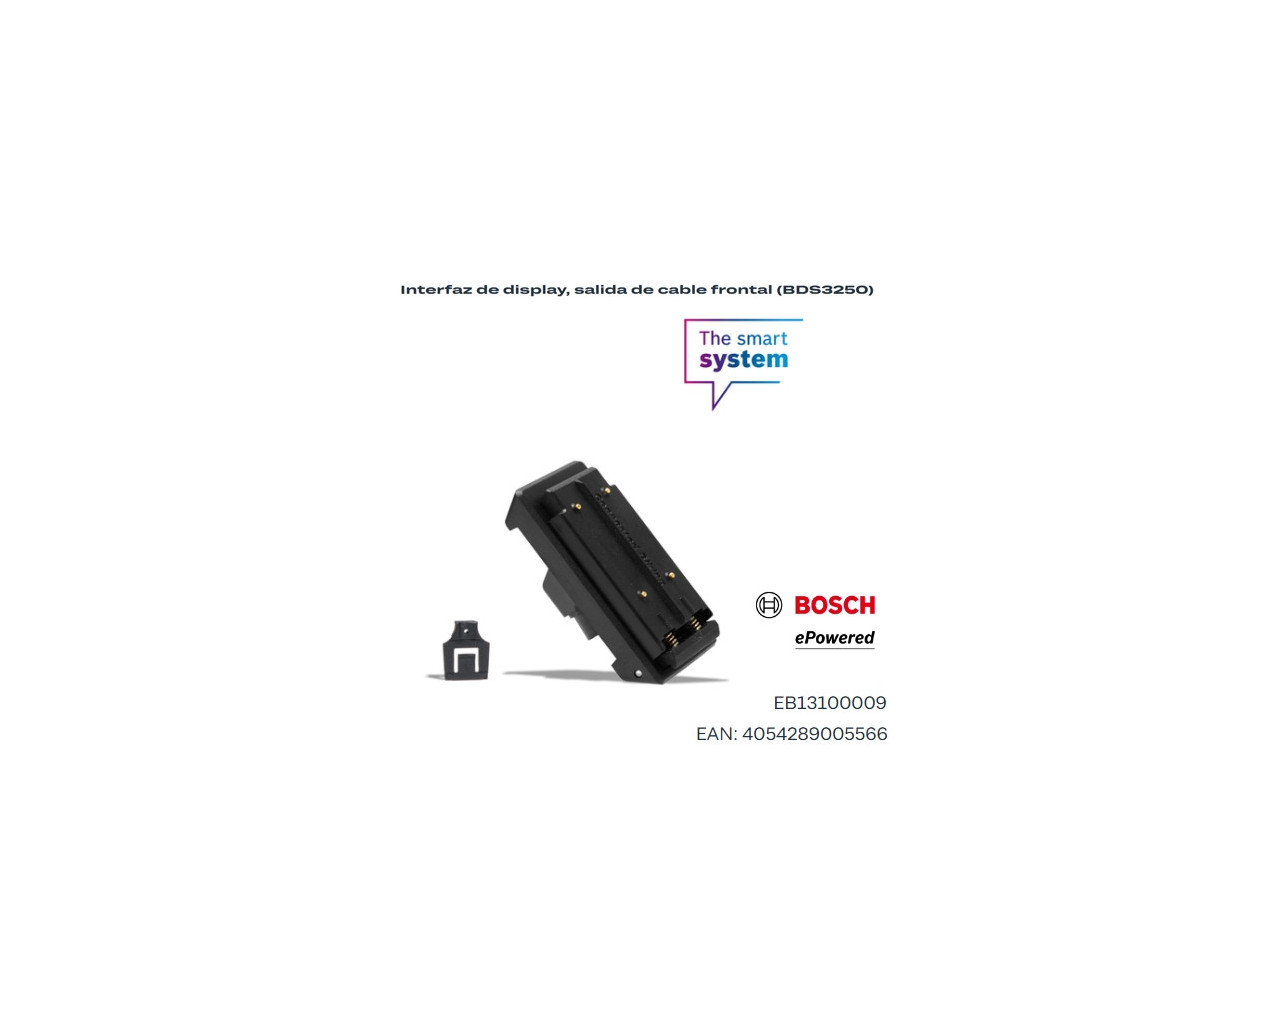 BASE BOSCH PANTALLA KIOX300 SMART SYSTEM (BDS3250) FRONTAL